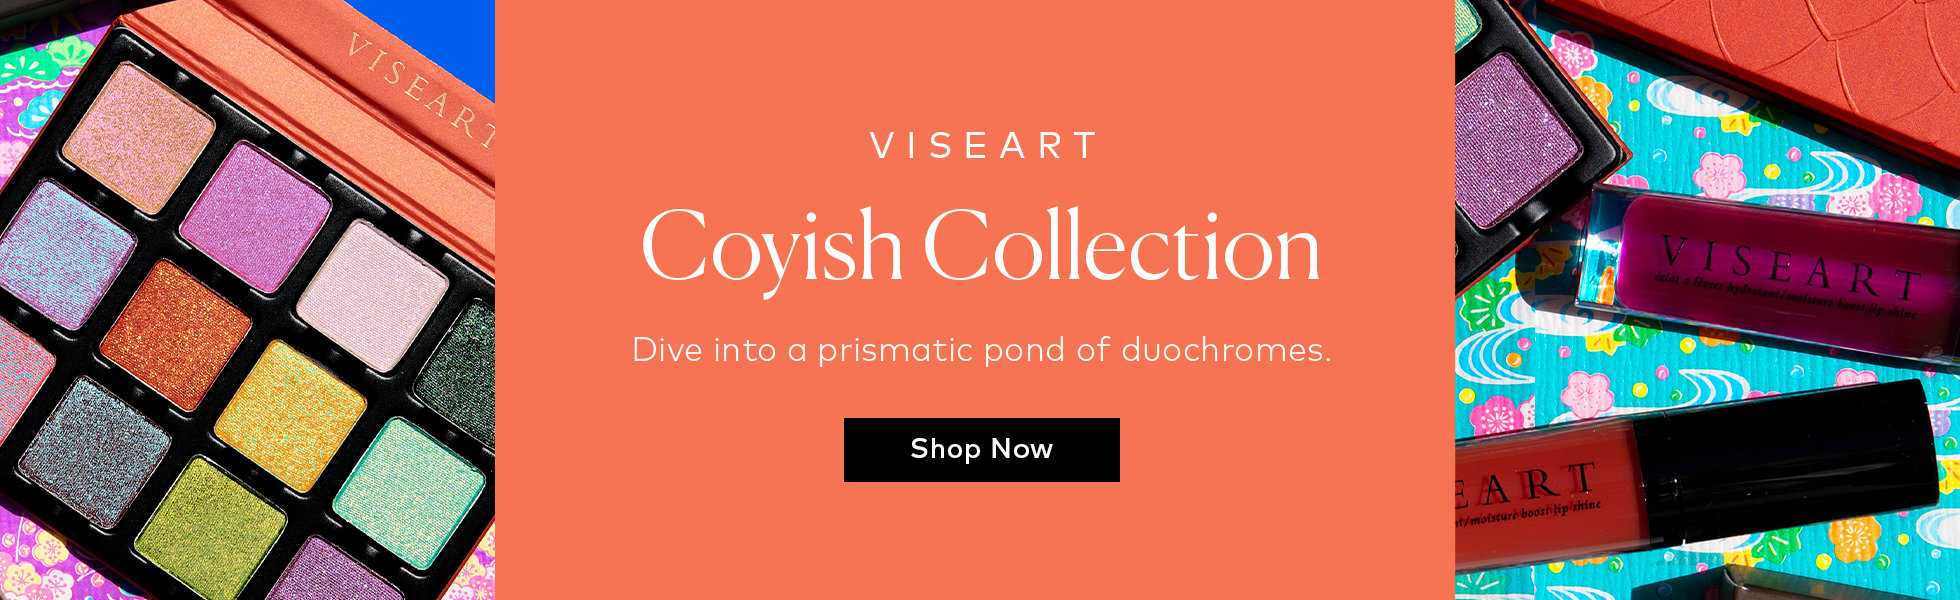 Shop the Viseart Coyish Collection on Beautylish.com!